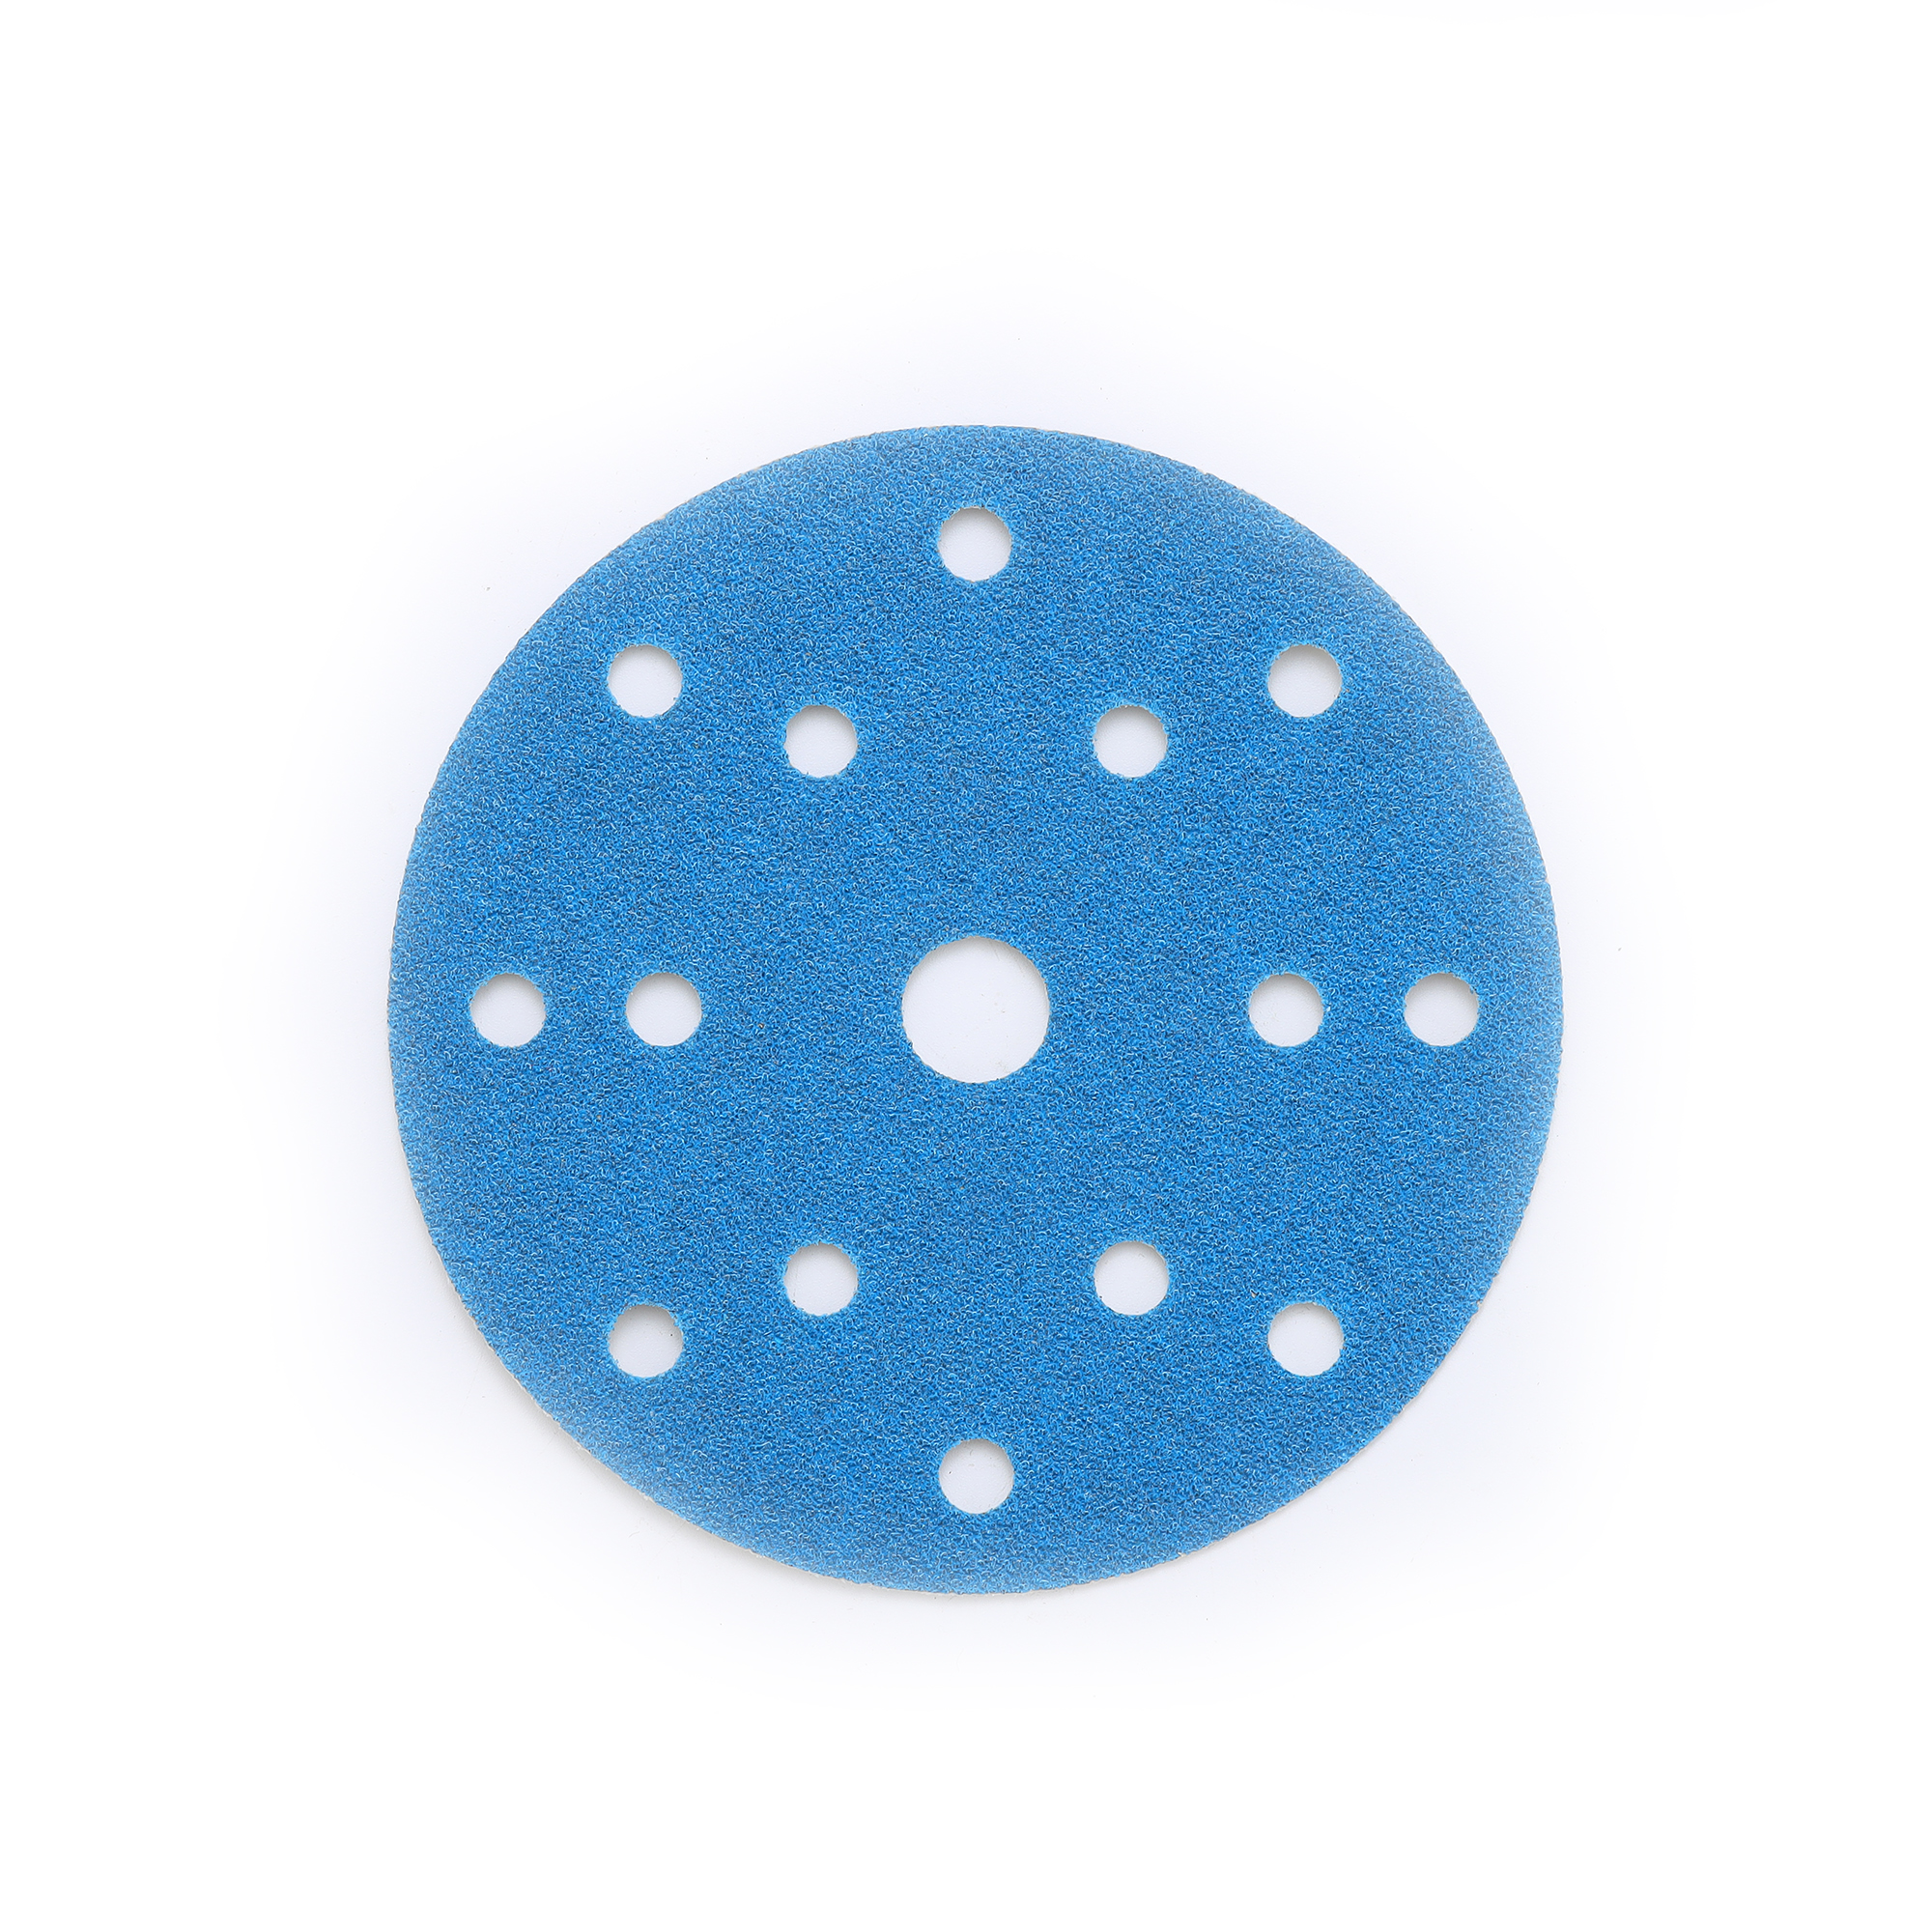 Zirconium Oxide Round Blue Sand Disc Paper with Hole